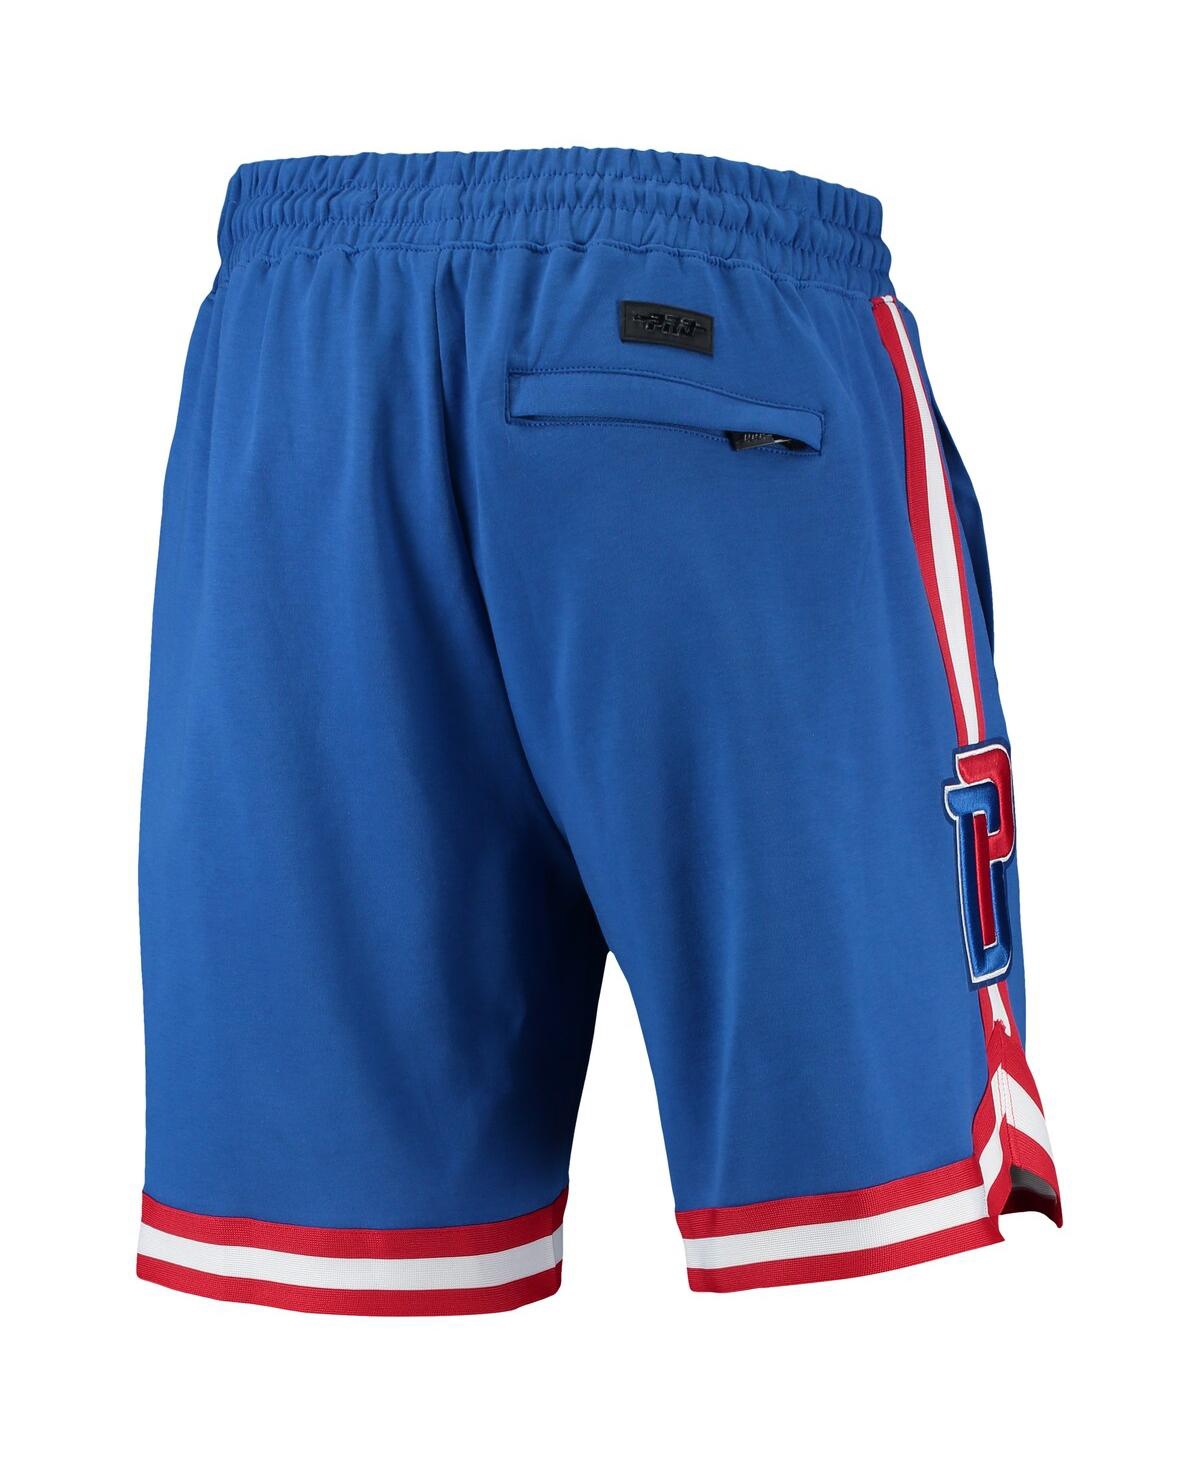 Shop Pro Standard Men's  Cade Cunningham Blue Detroit Pistons Player Replica Shorts